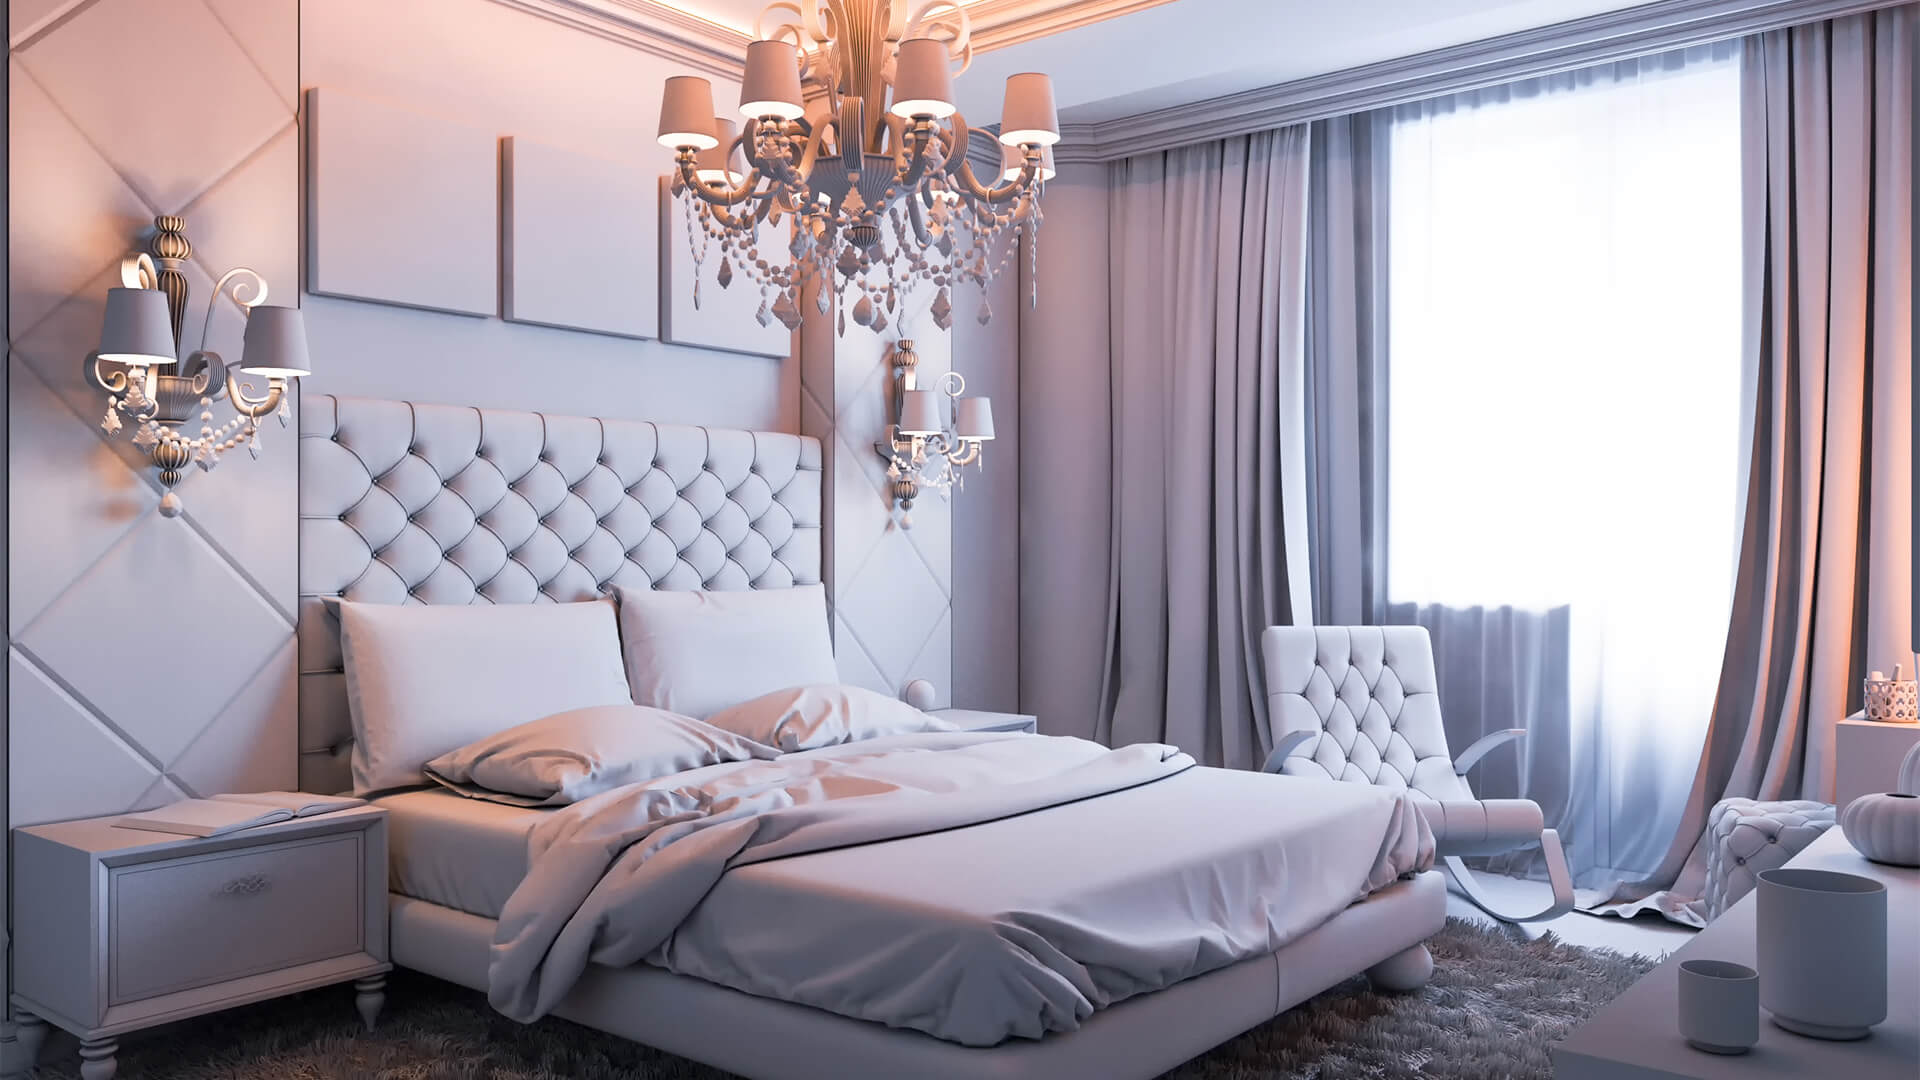 Classic Bedroom Design Ideas for Couples   Build Magazine